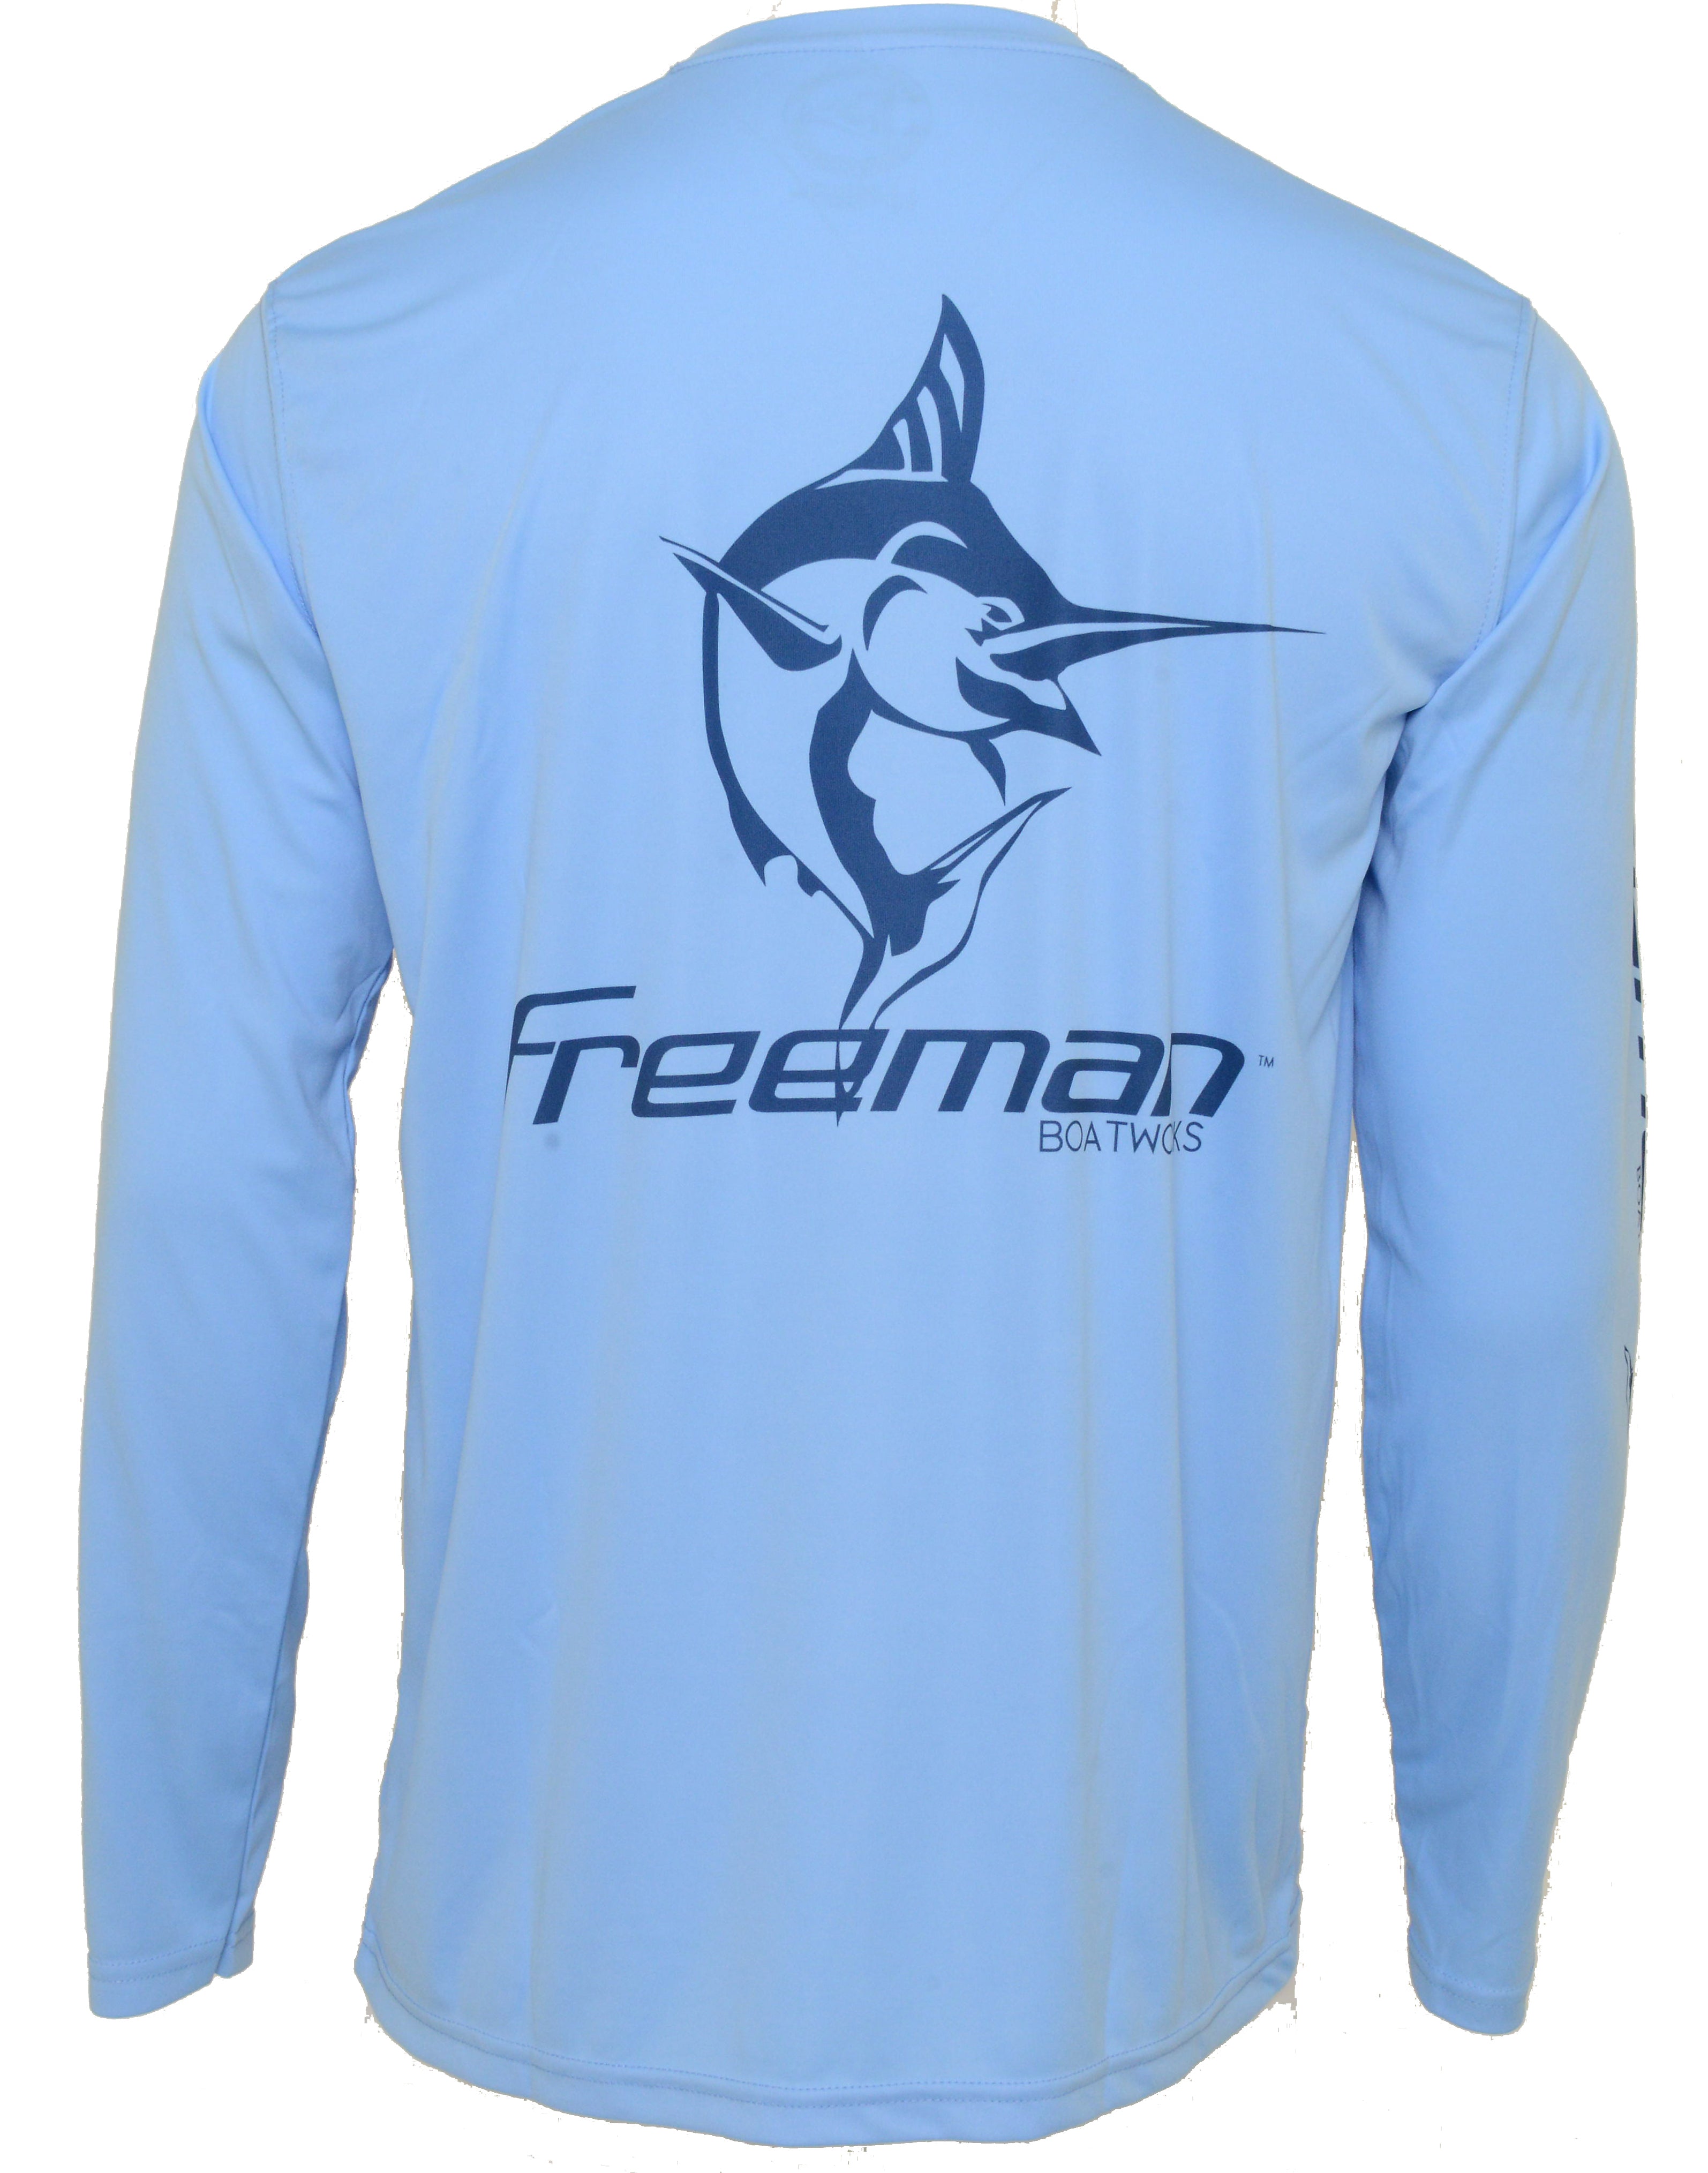 Freeman Boatworks Performance Shirt Small / Blue